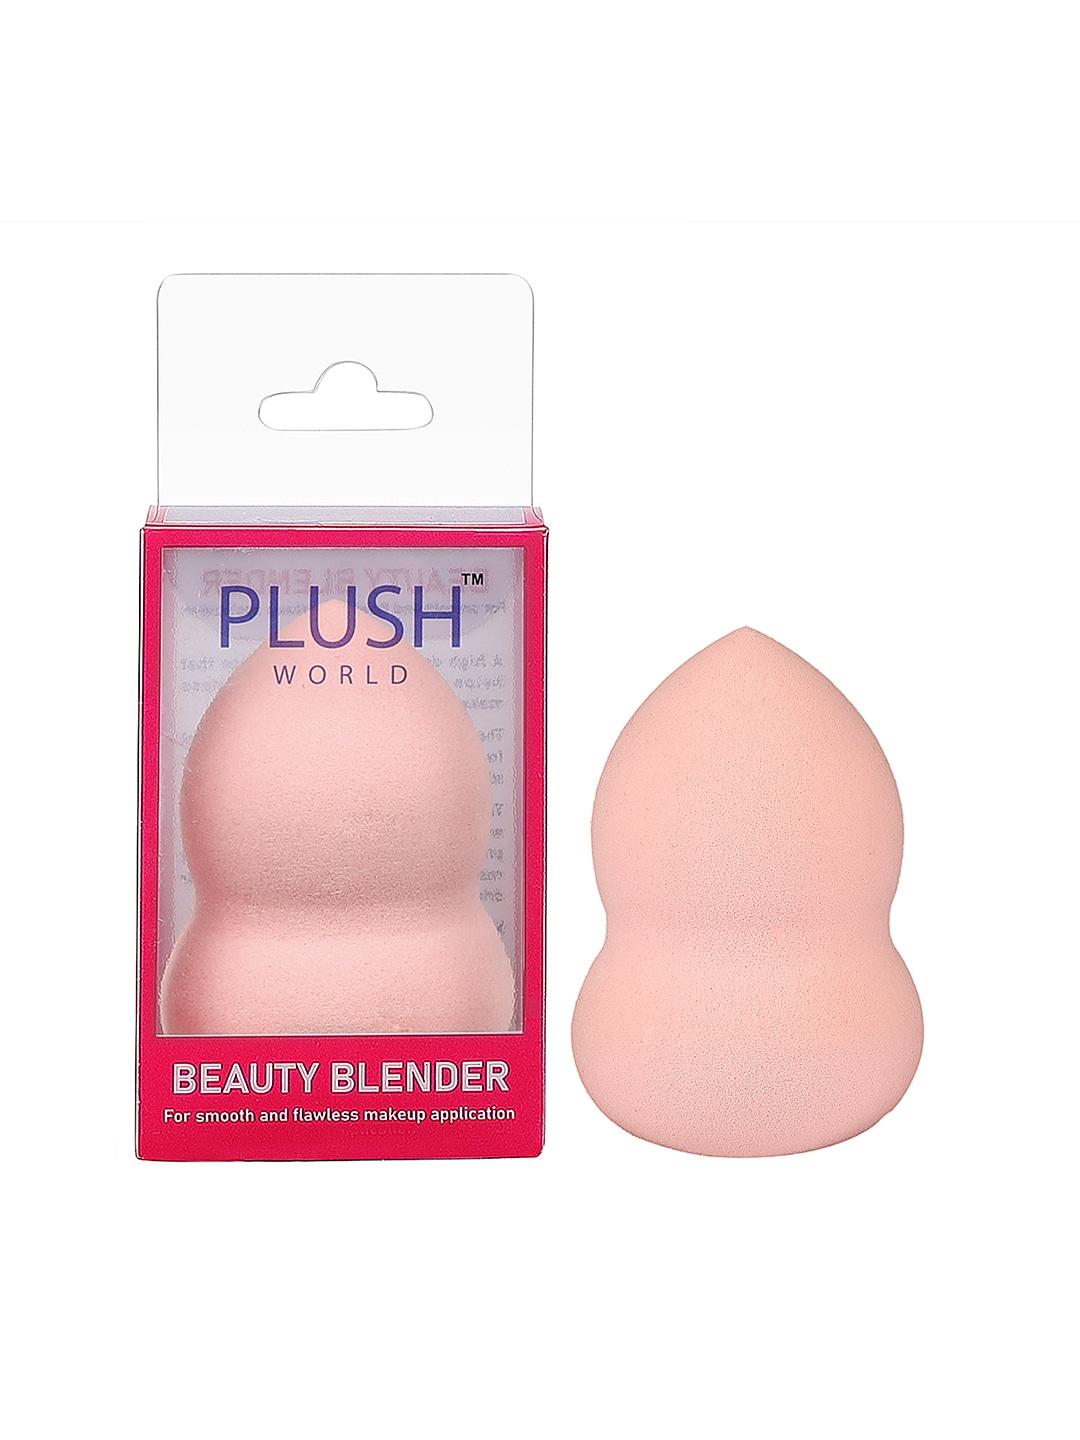 Plush World Beauty Blender Pear Shape